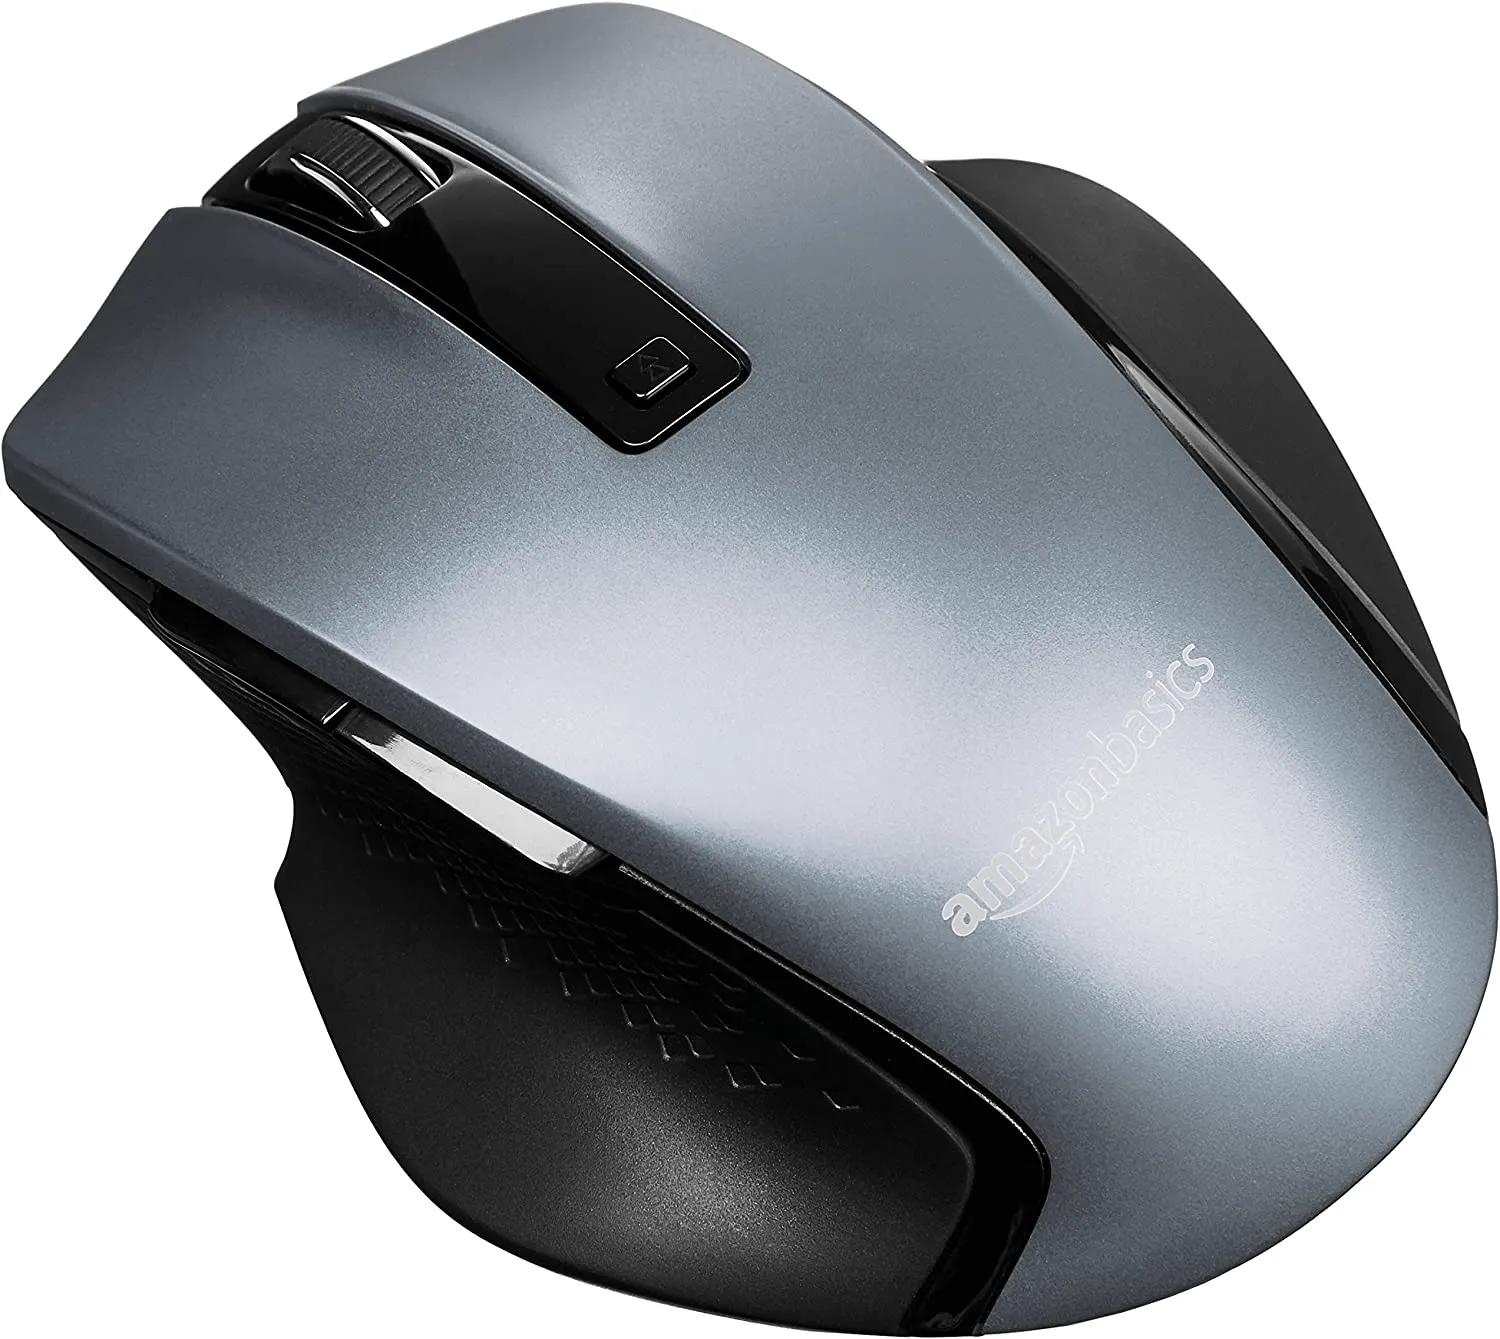 Amazon Basics Compact Ergonomic Wireless Mouse with Fast Scrolling 